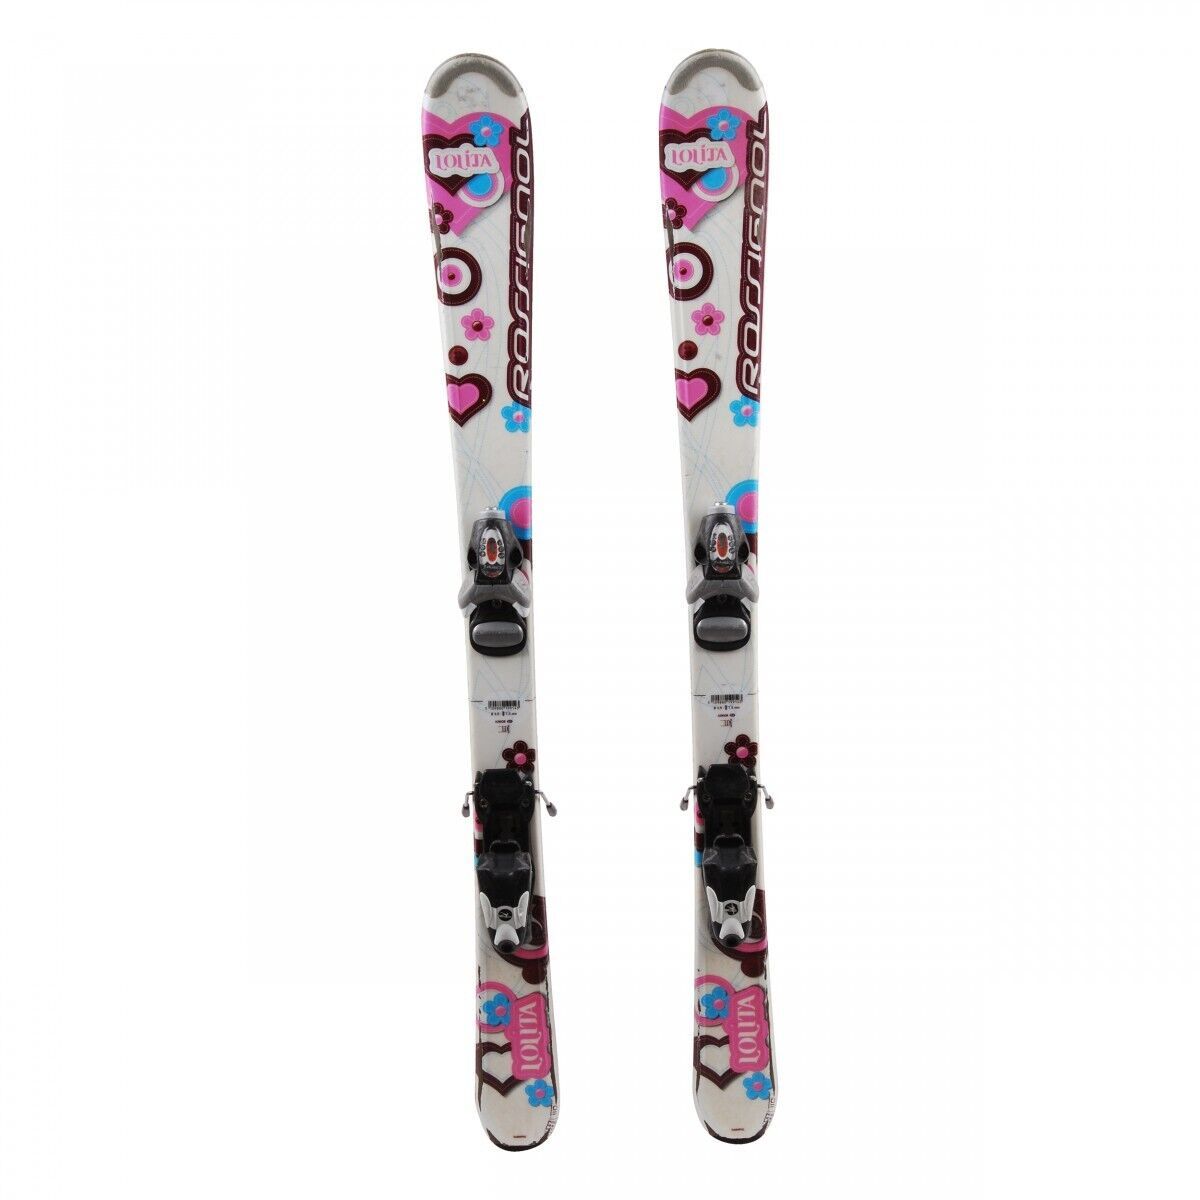 Skis d'occasion - Lolita - 120 cm